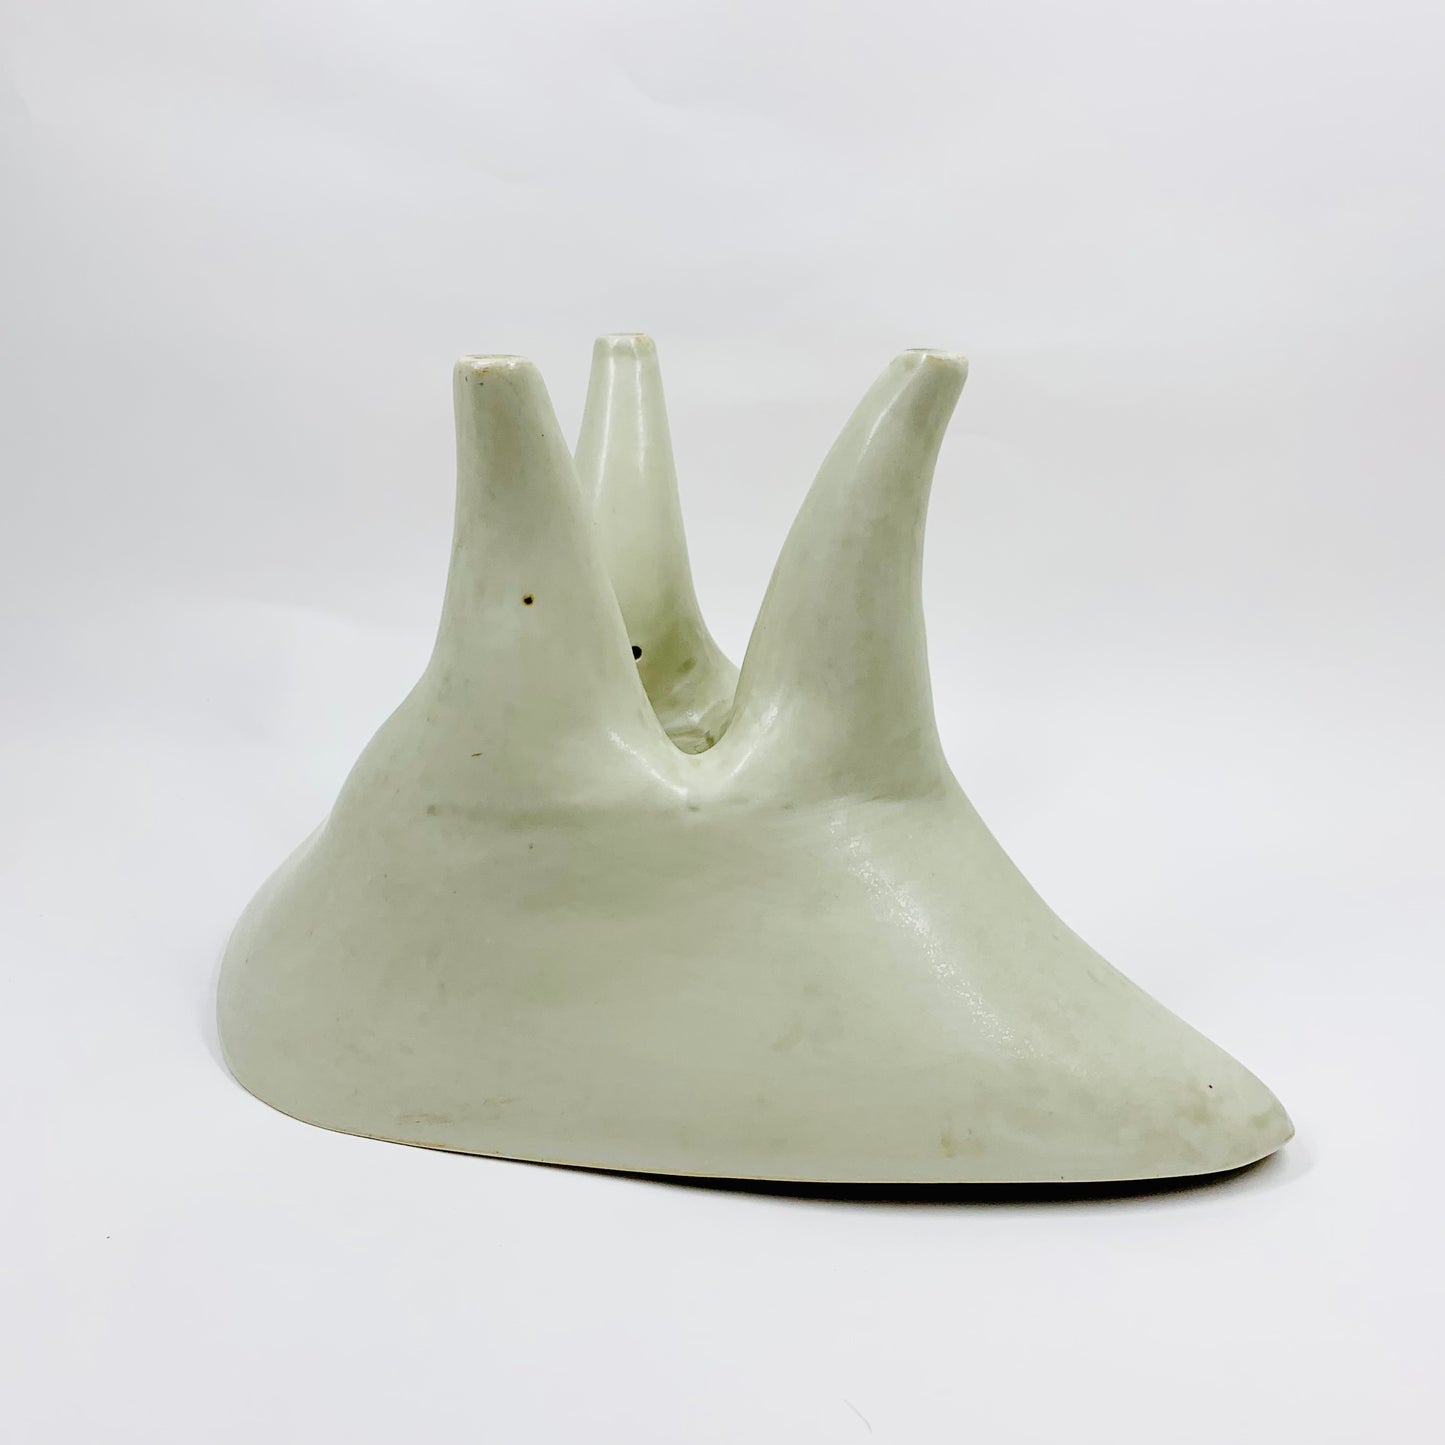 Extremely rare hand made Midcentury modernist Japanese pottery ikebana vessel